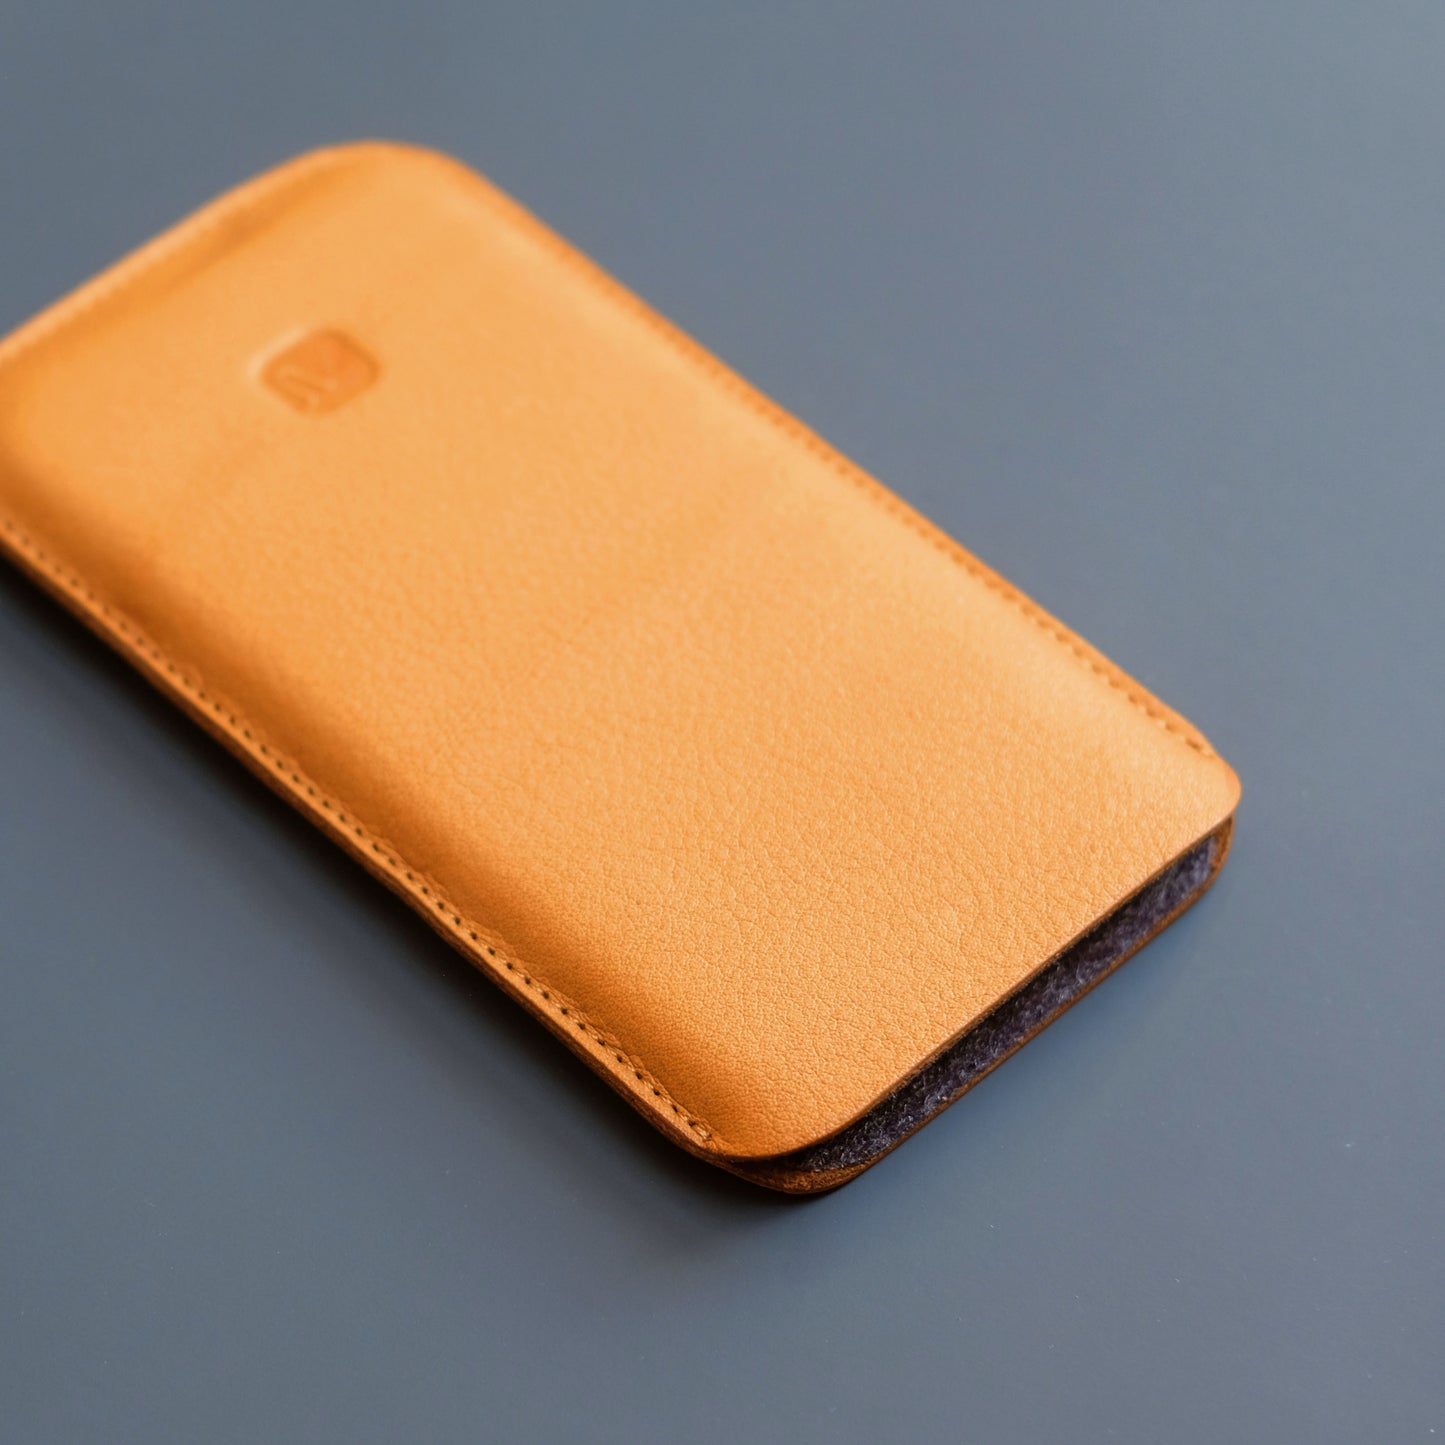 Handy Sleeve aus orangefarbenem Leder mit grauem Filz Futter